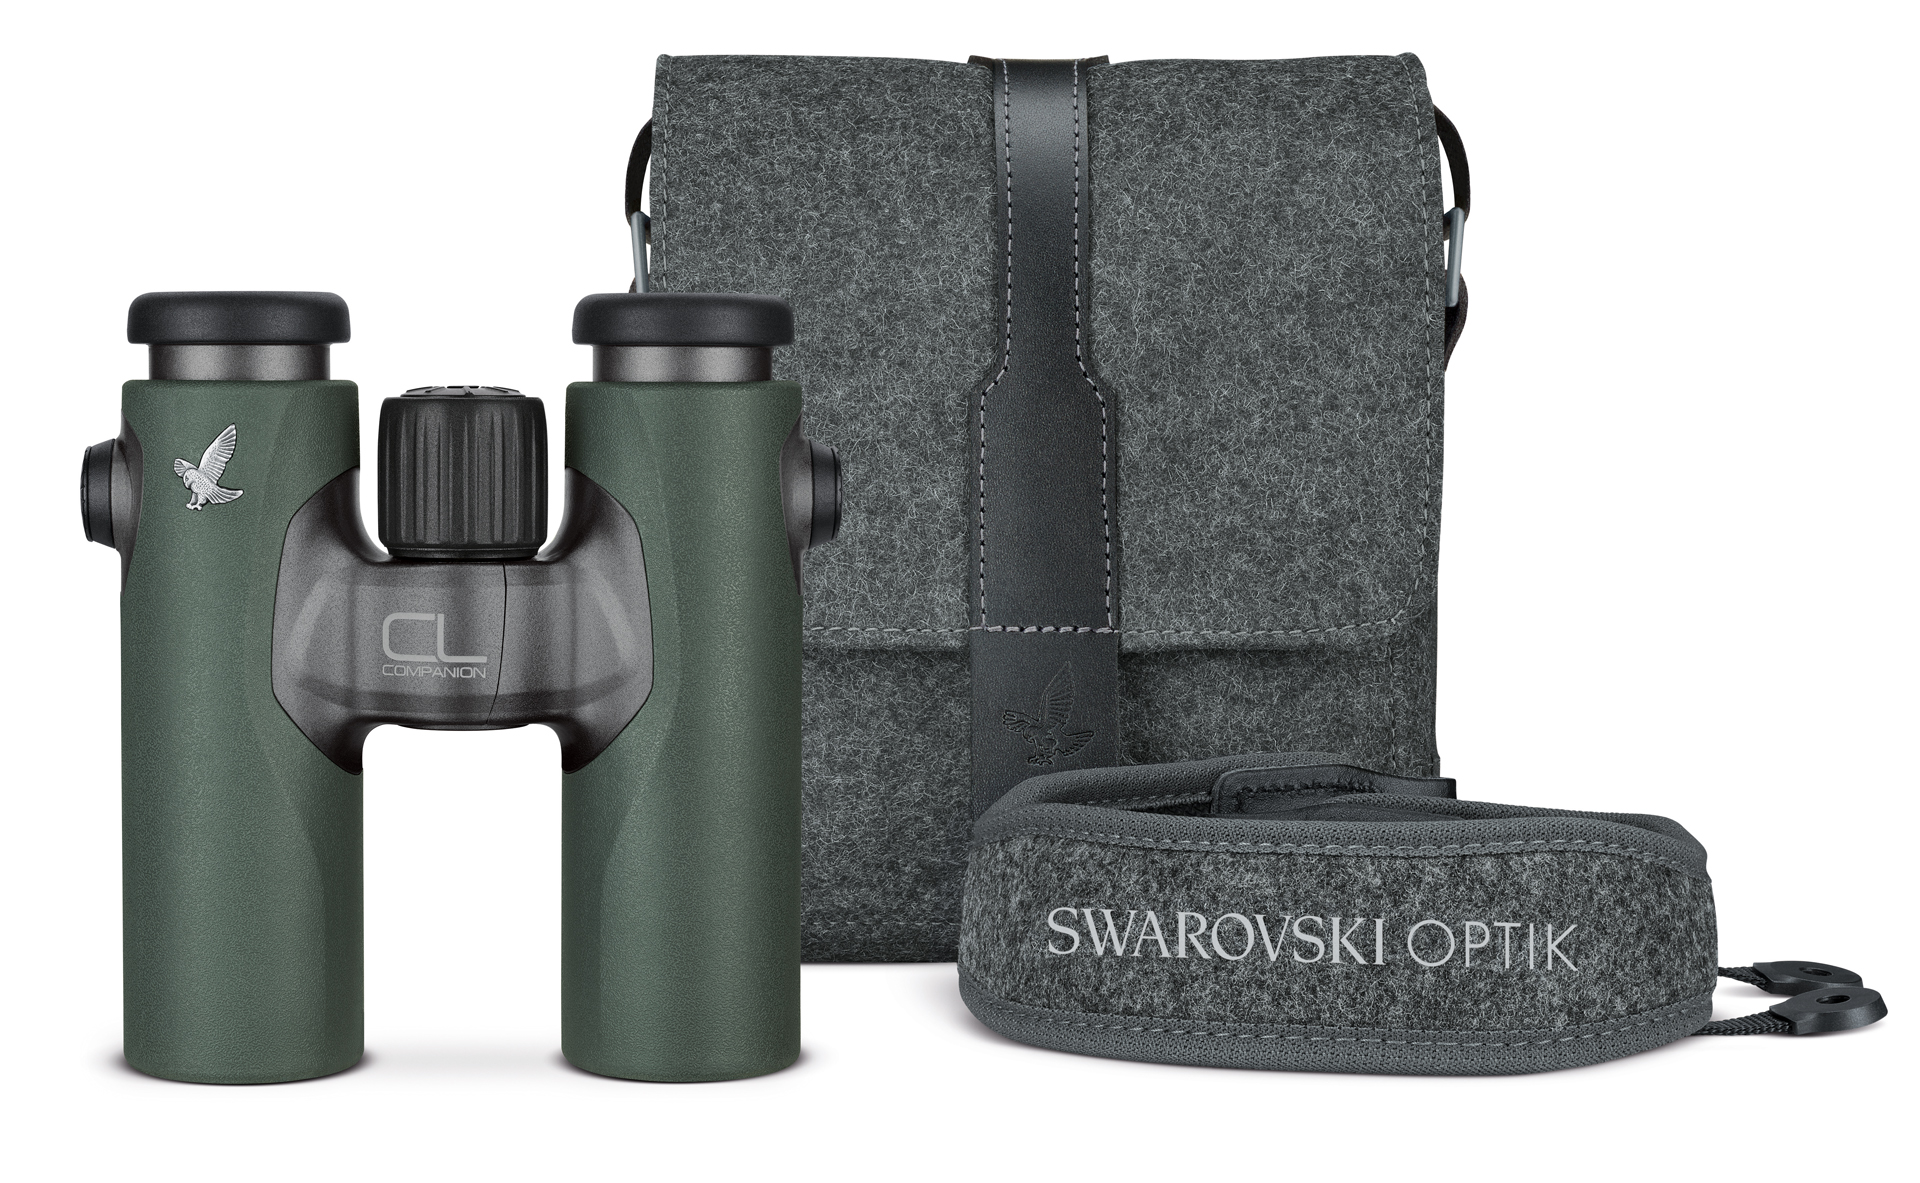 Swarovski Optik CL Companion 10x30 grün - Northern Lights